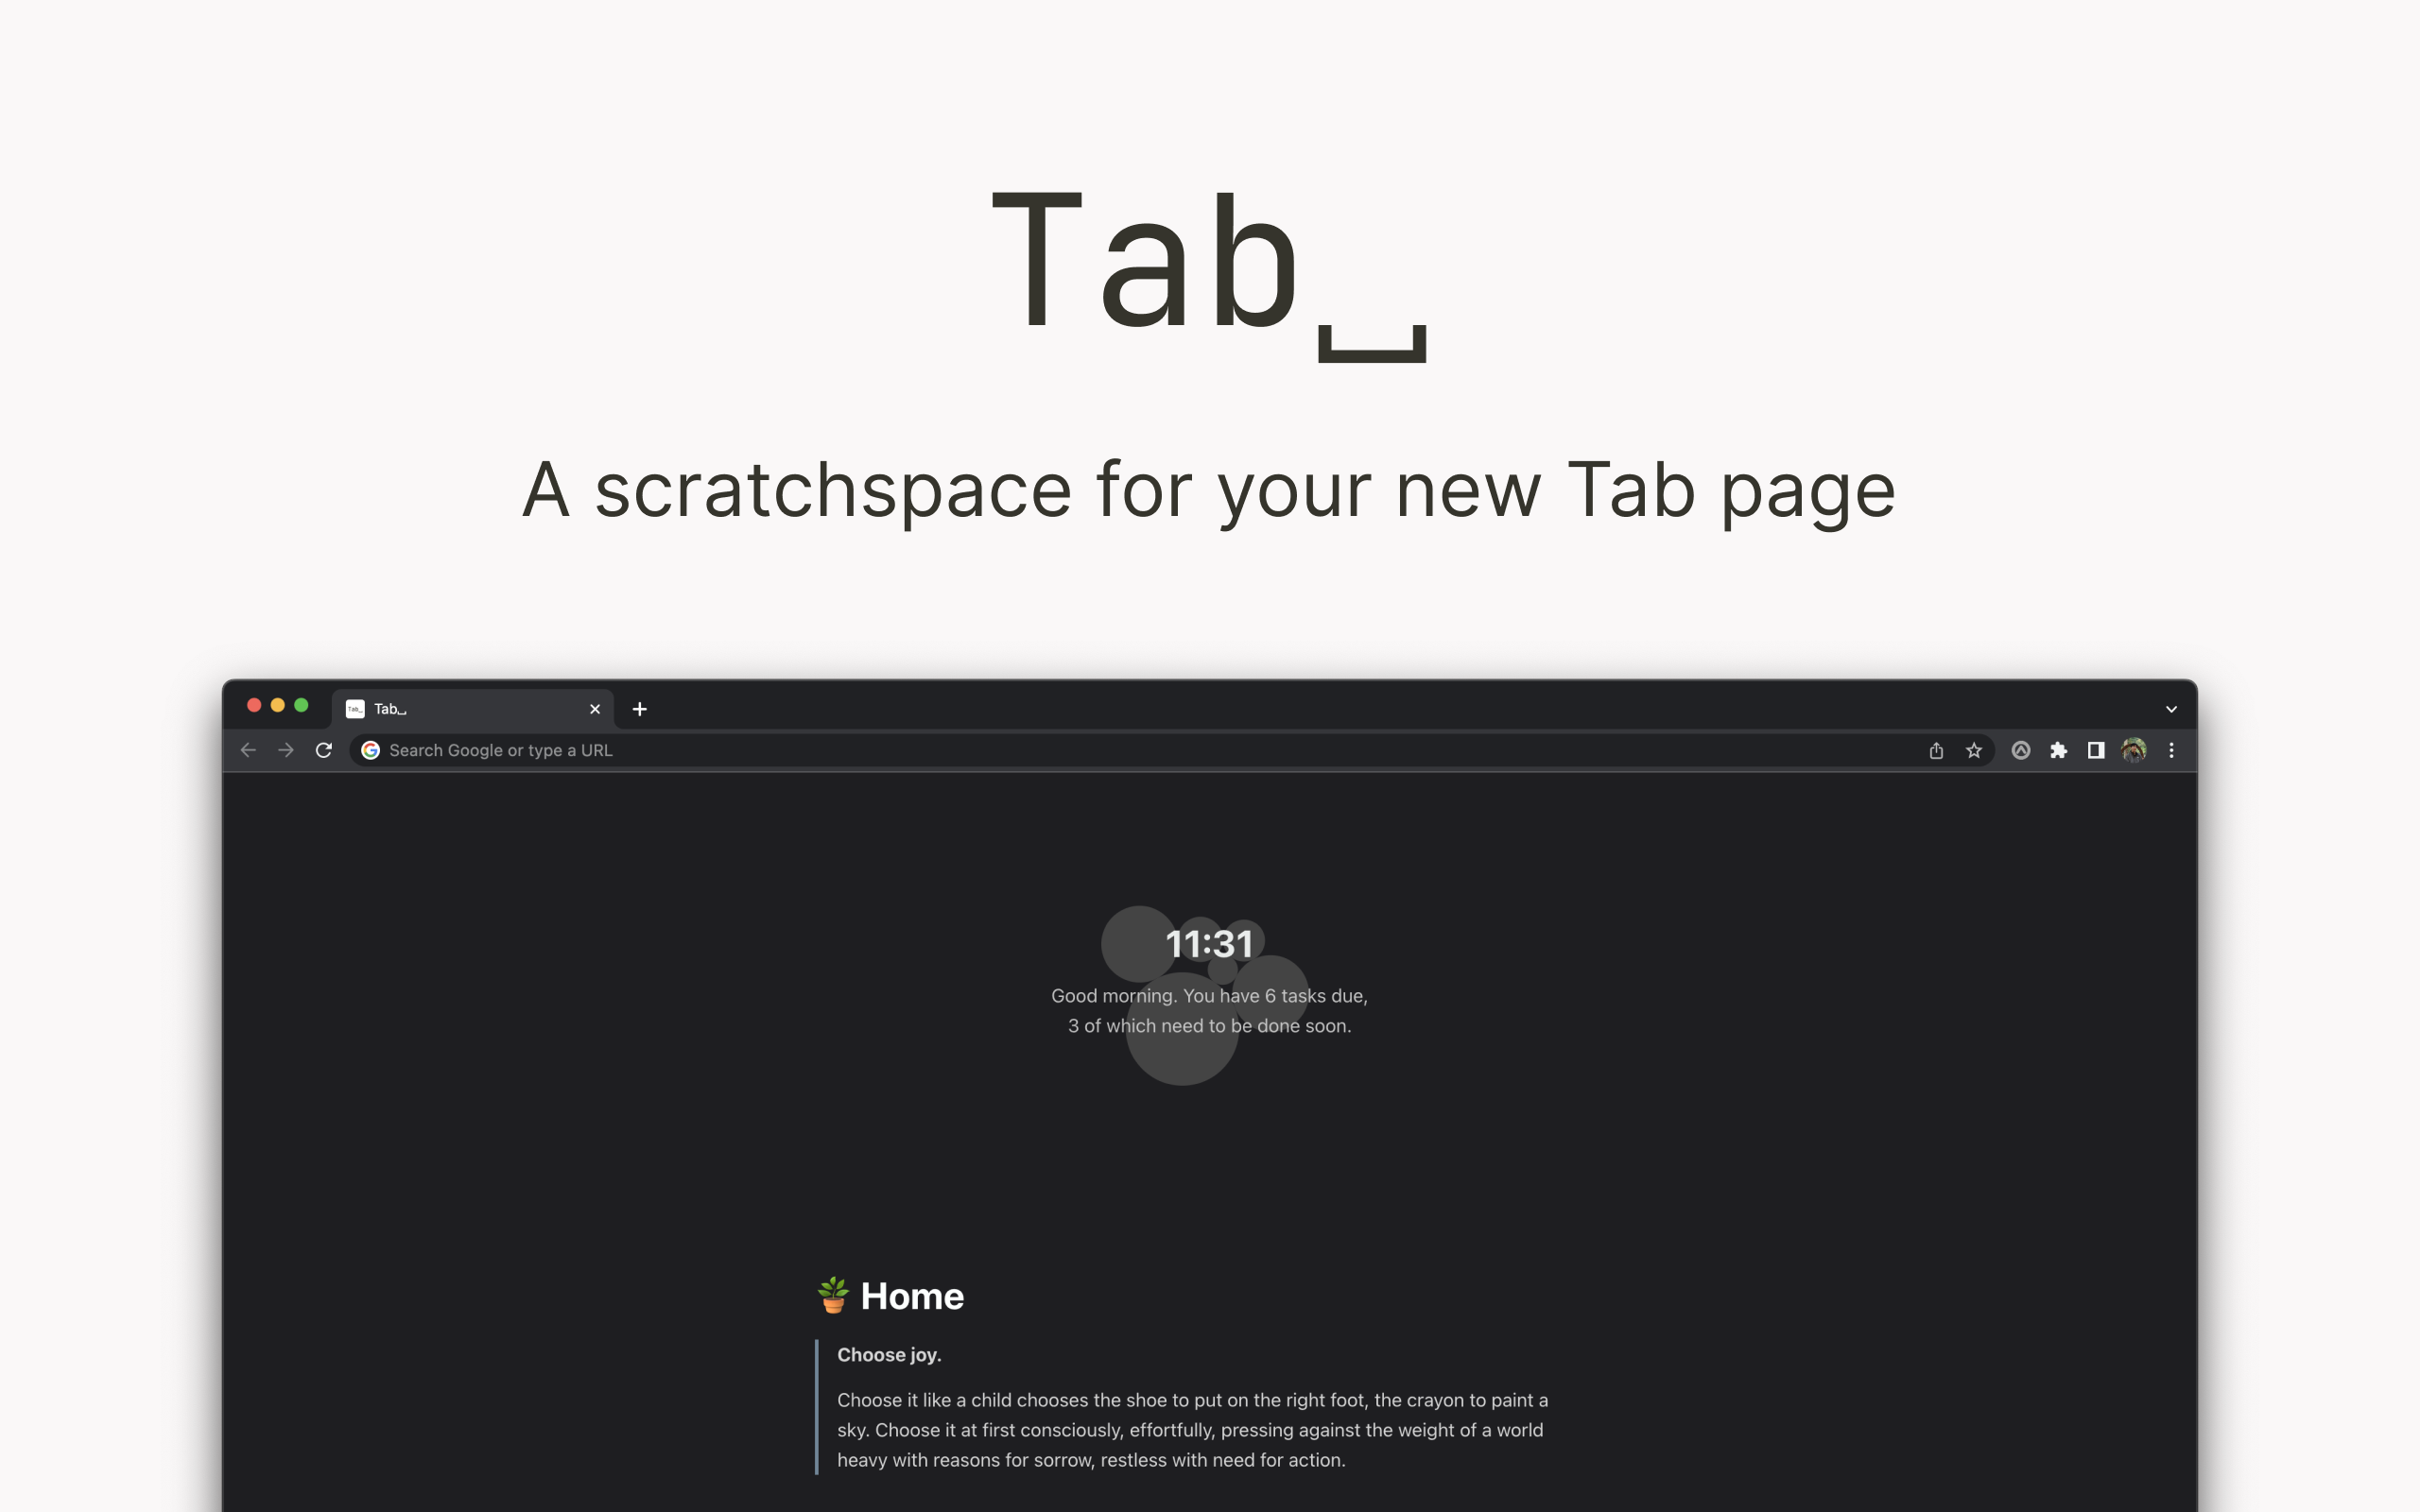 TabSpace